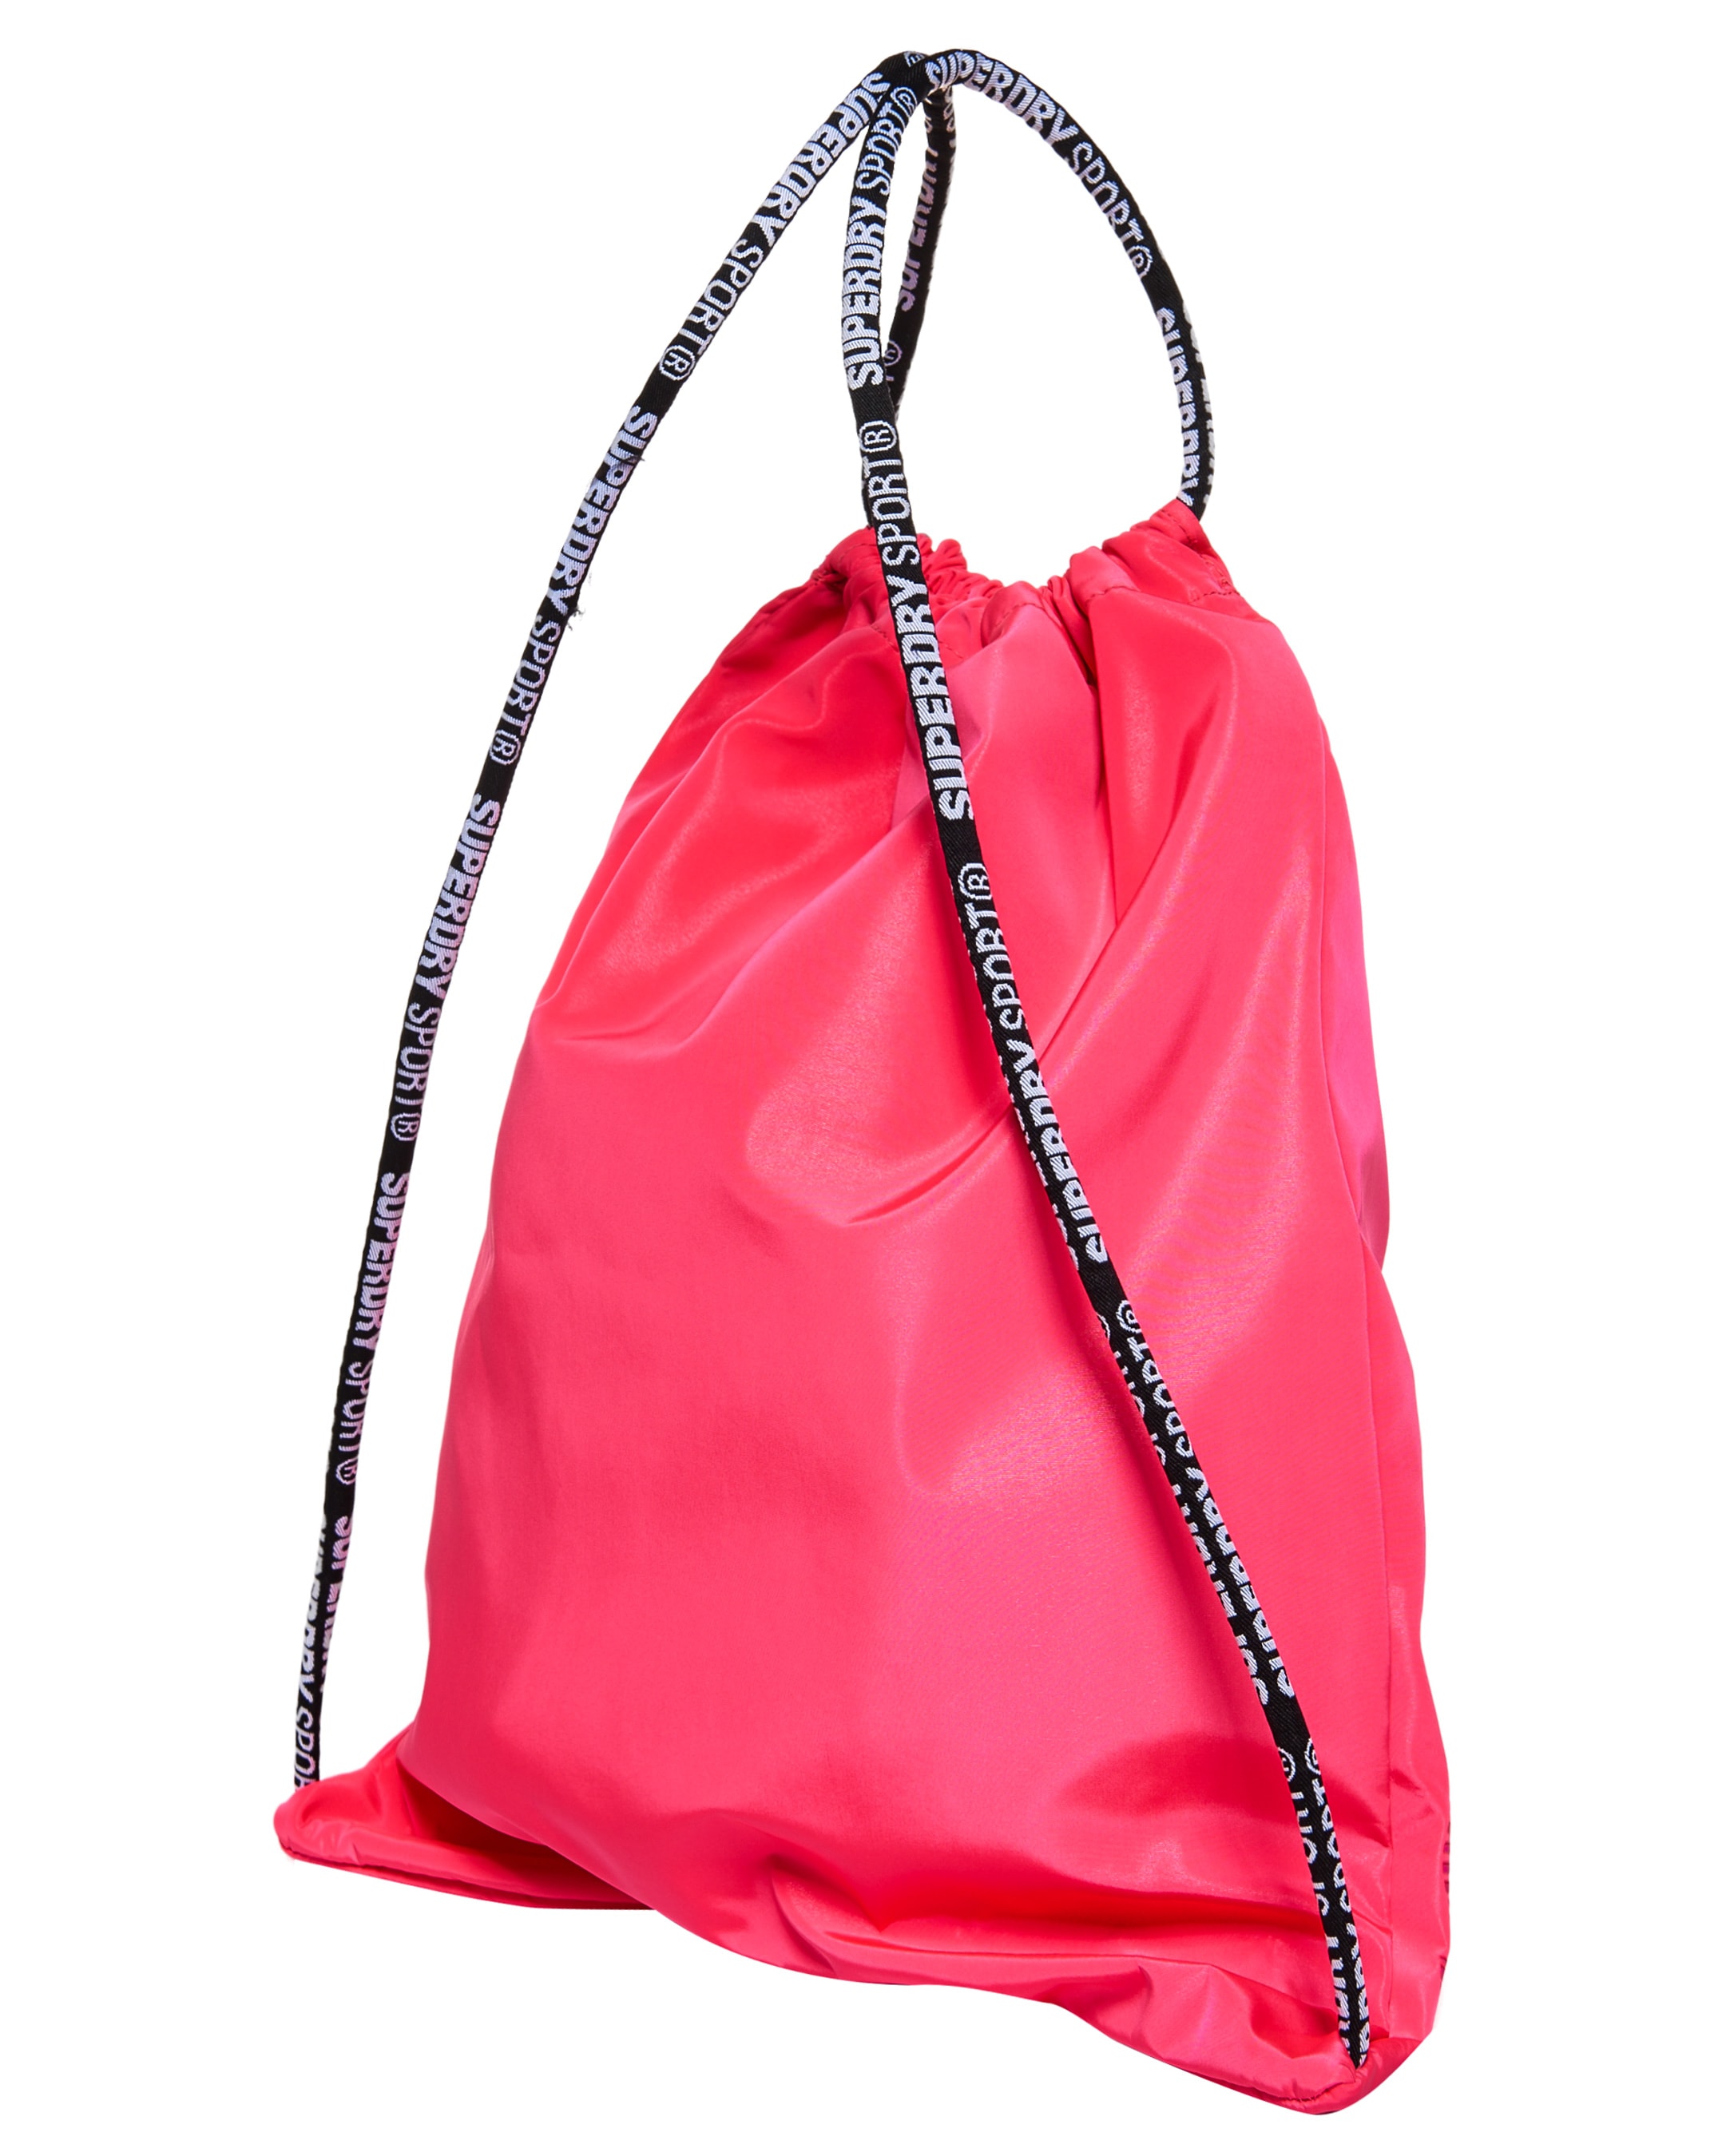 Superdry Drawstring Bag - Vibe Pink